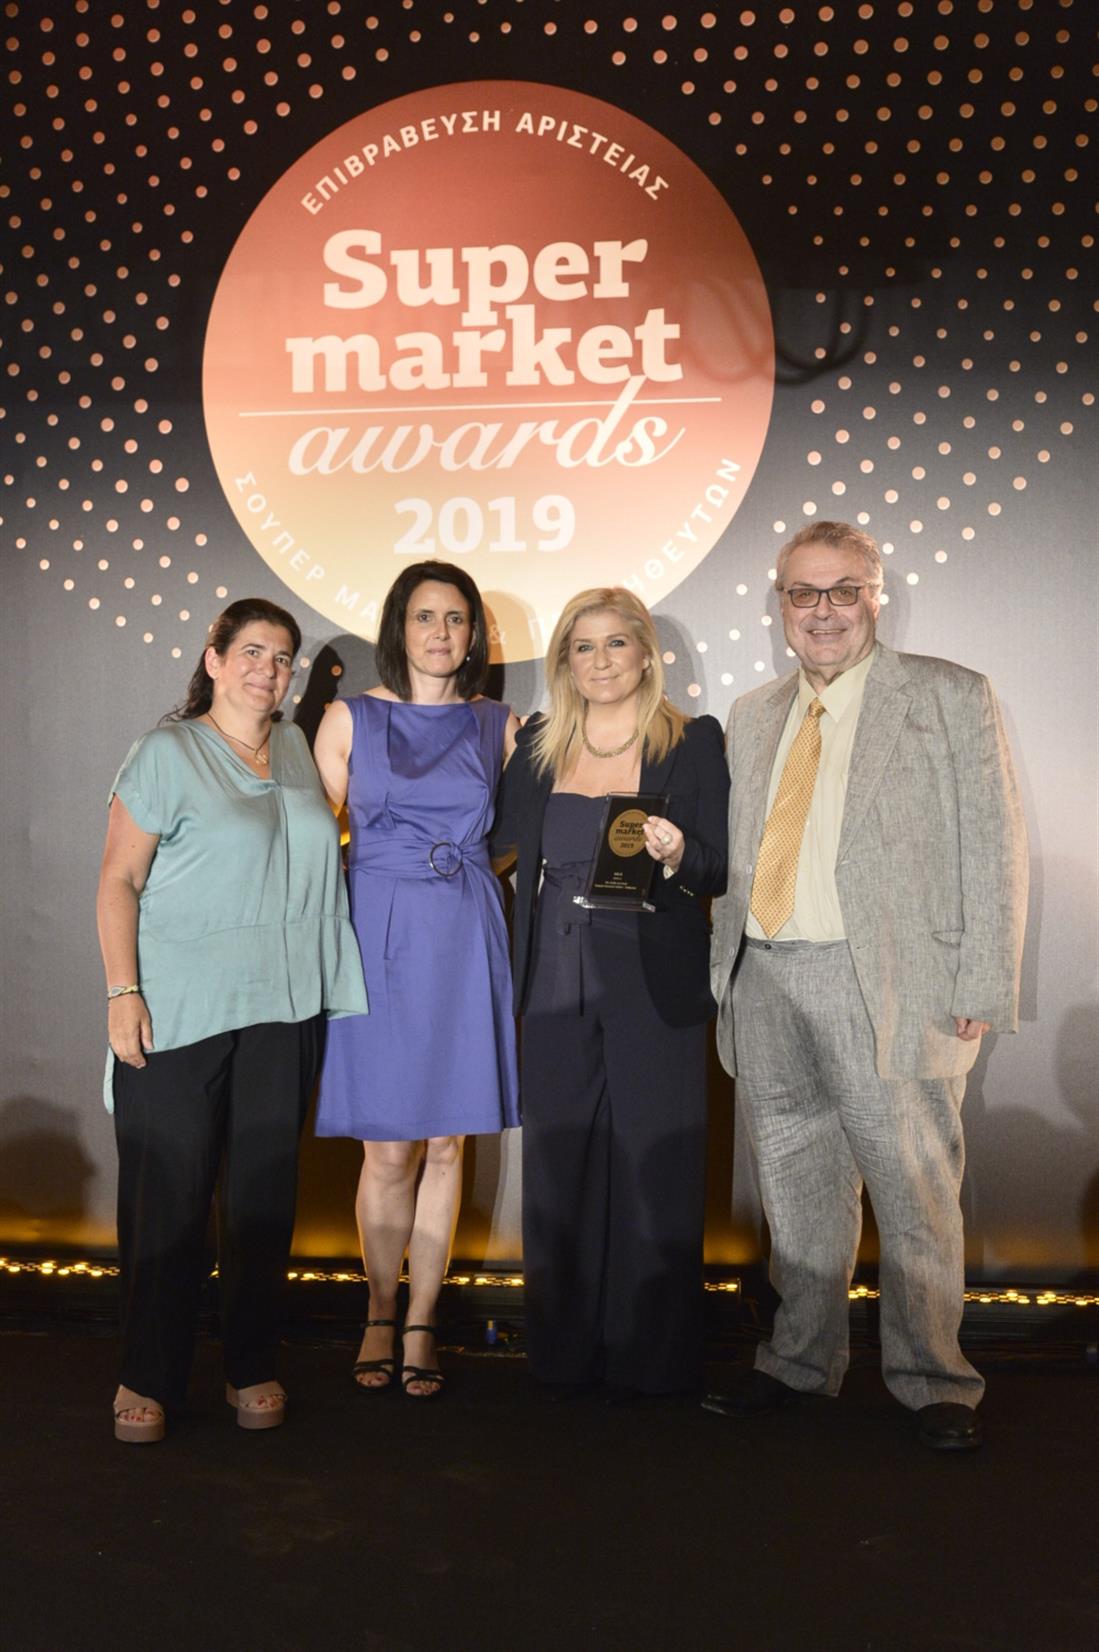 Super market awards 2019 - ΓΙΩΤΗΣ